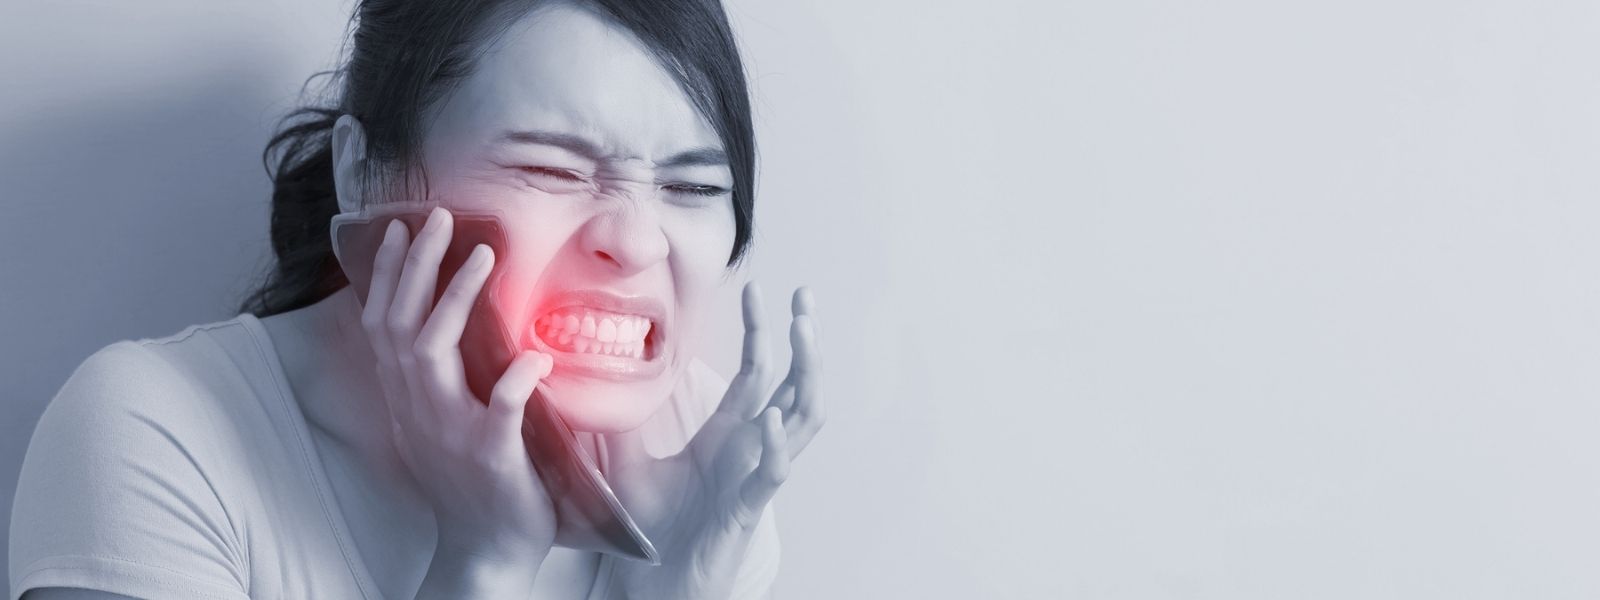 A girl in severe dental pain